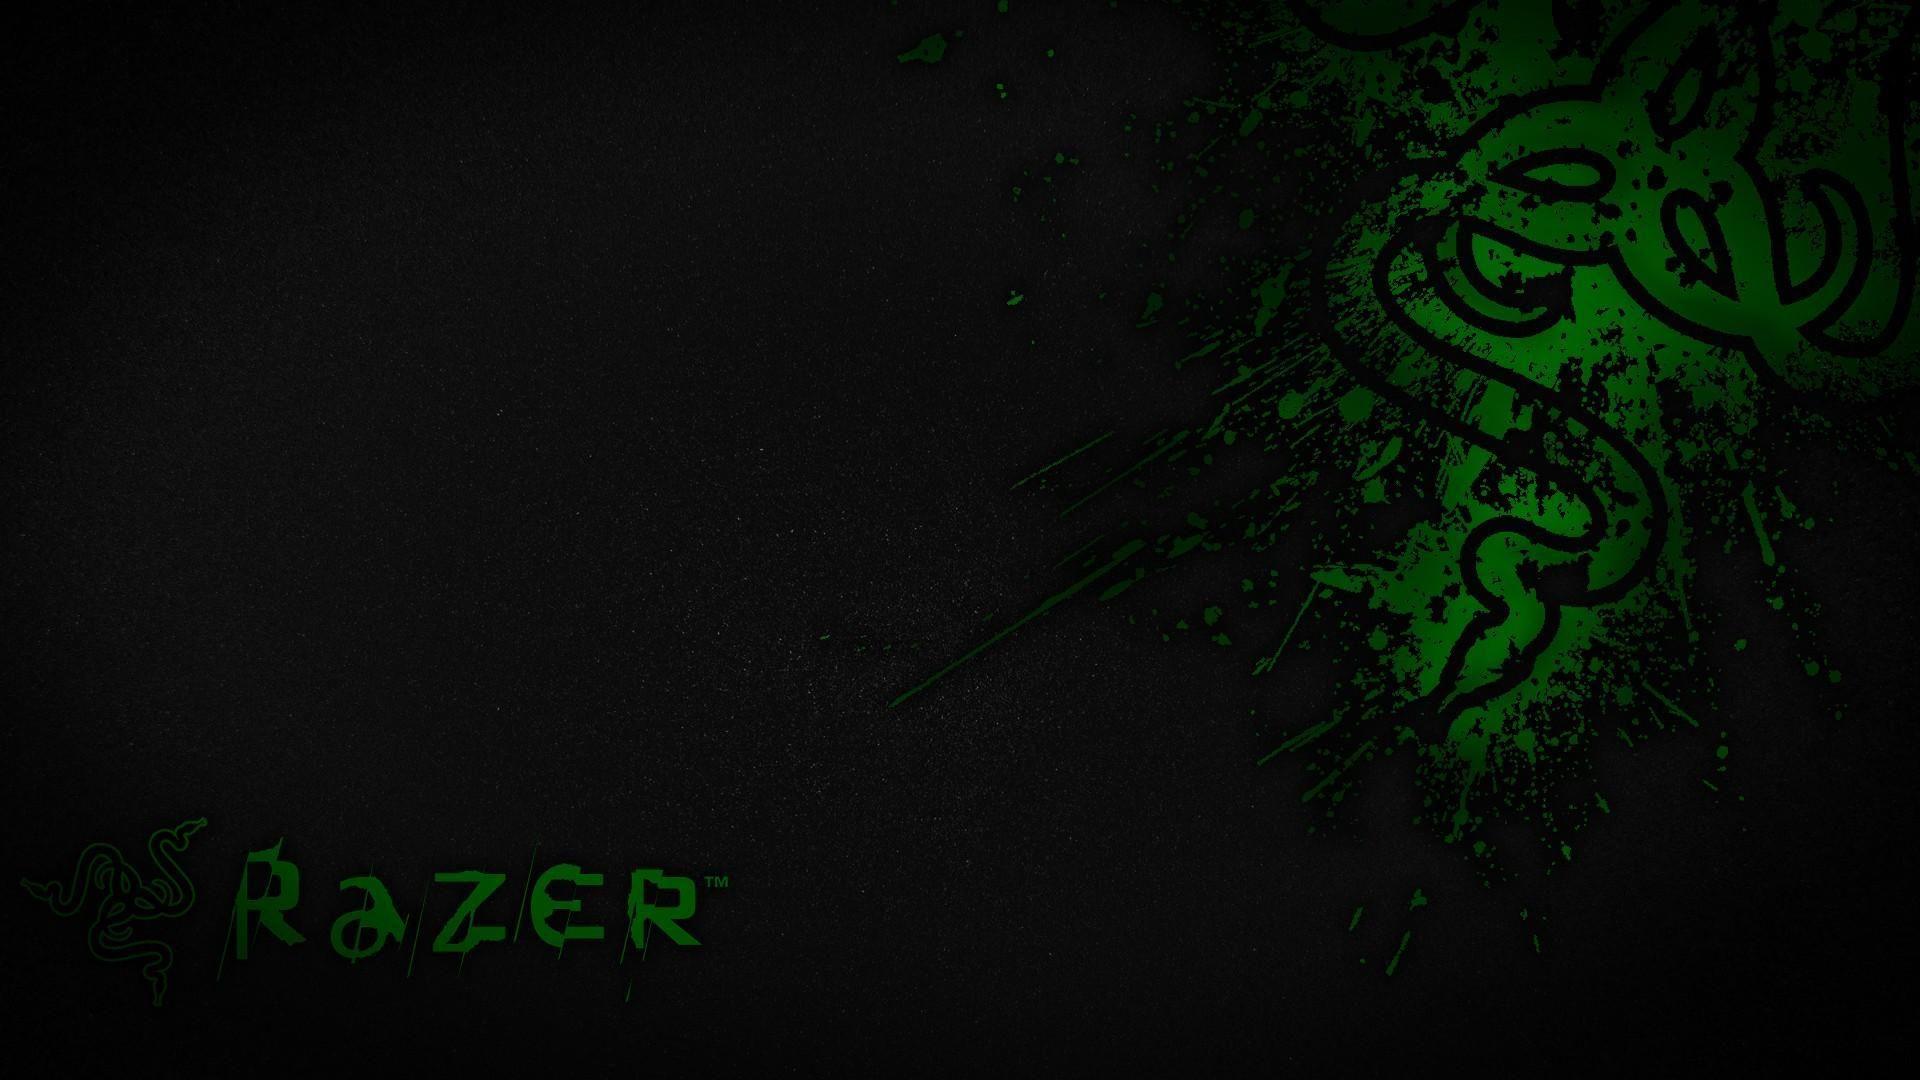 Razer Wallpaper, 37 Razer Android Compatible Background, Fungyung.com